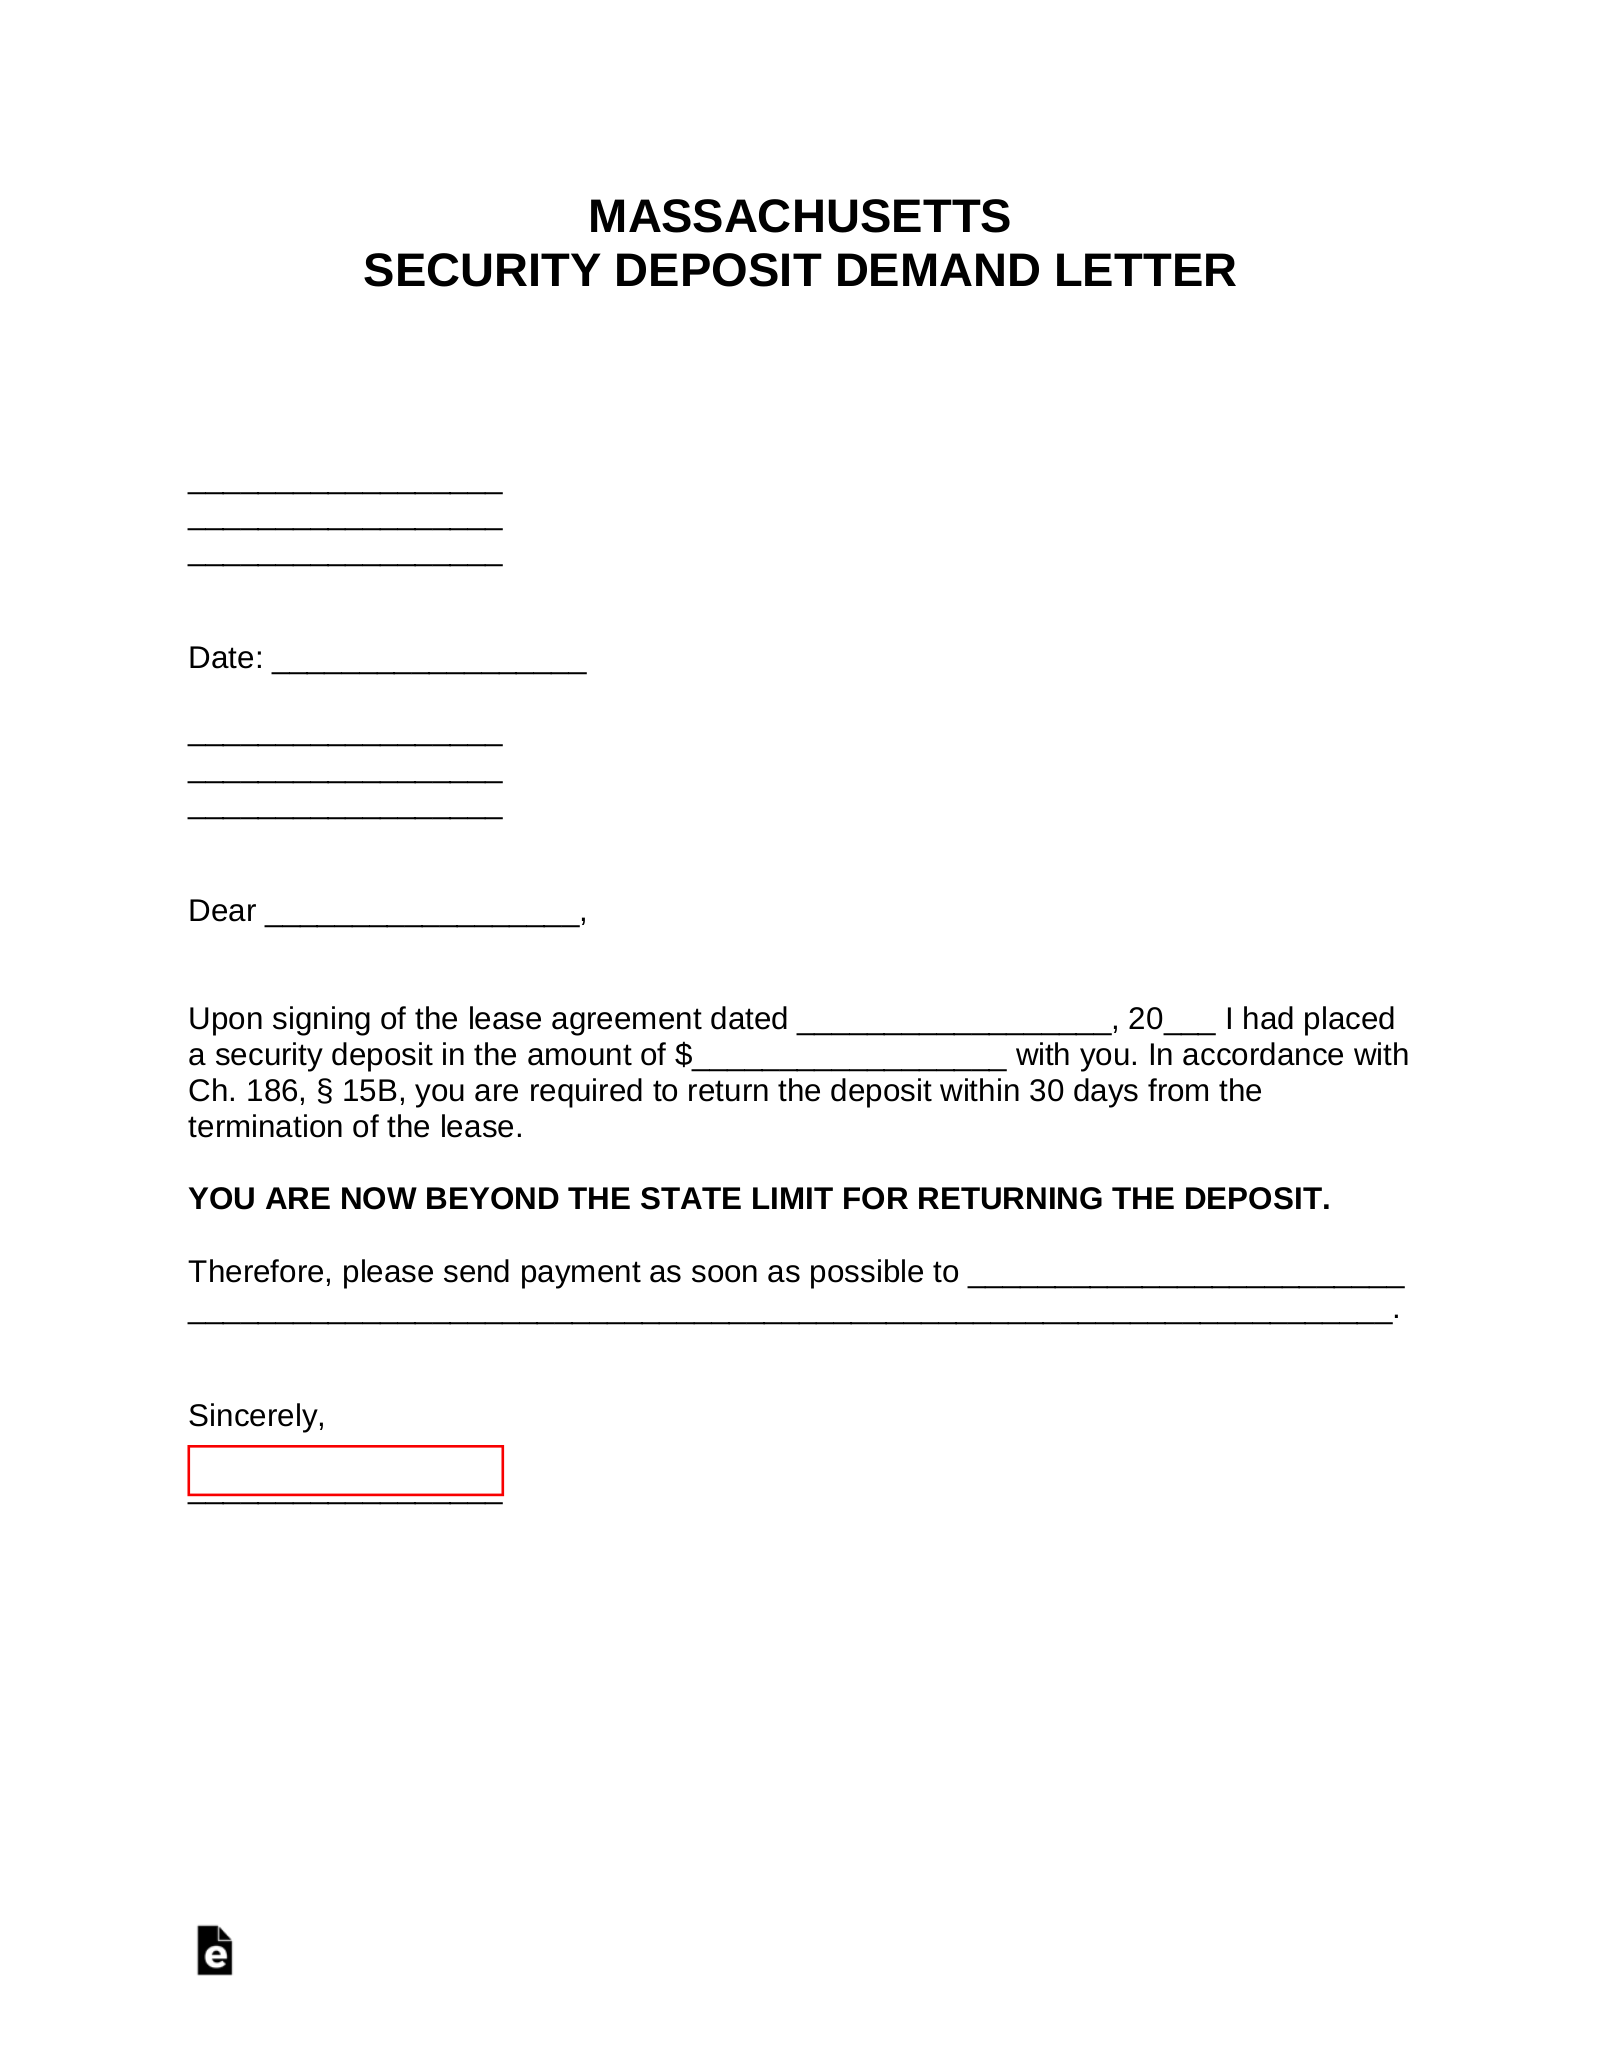 Massachusetts Security Deposit Demand Letter